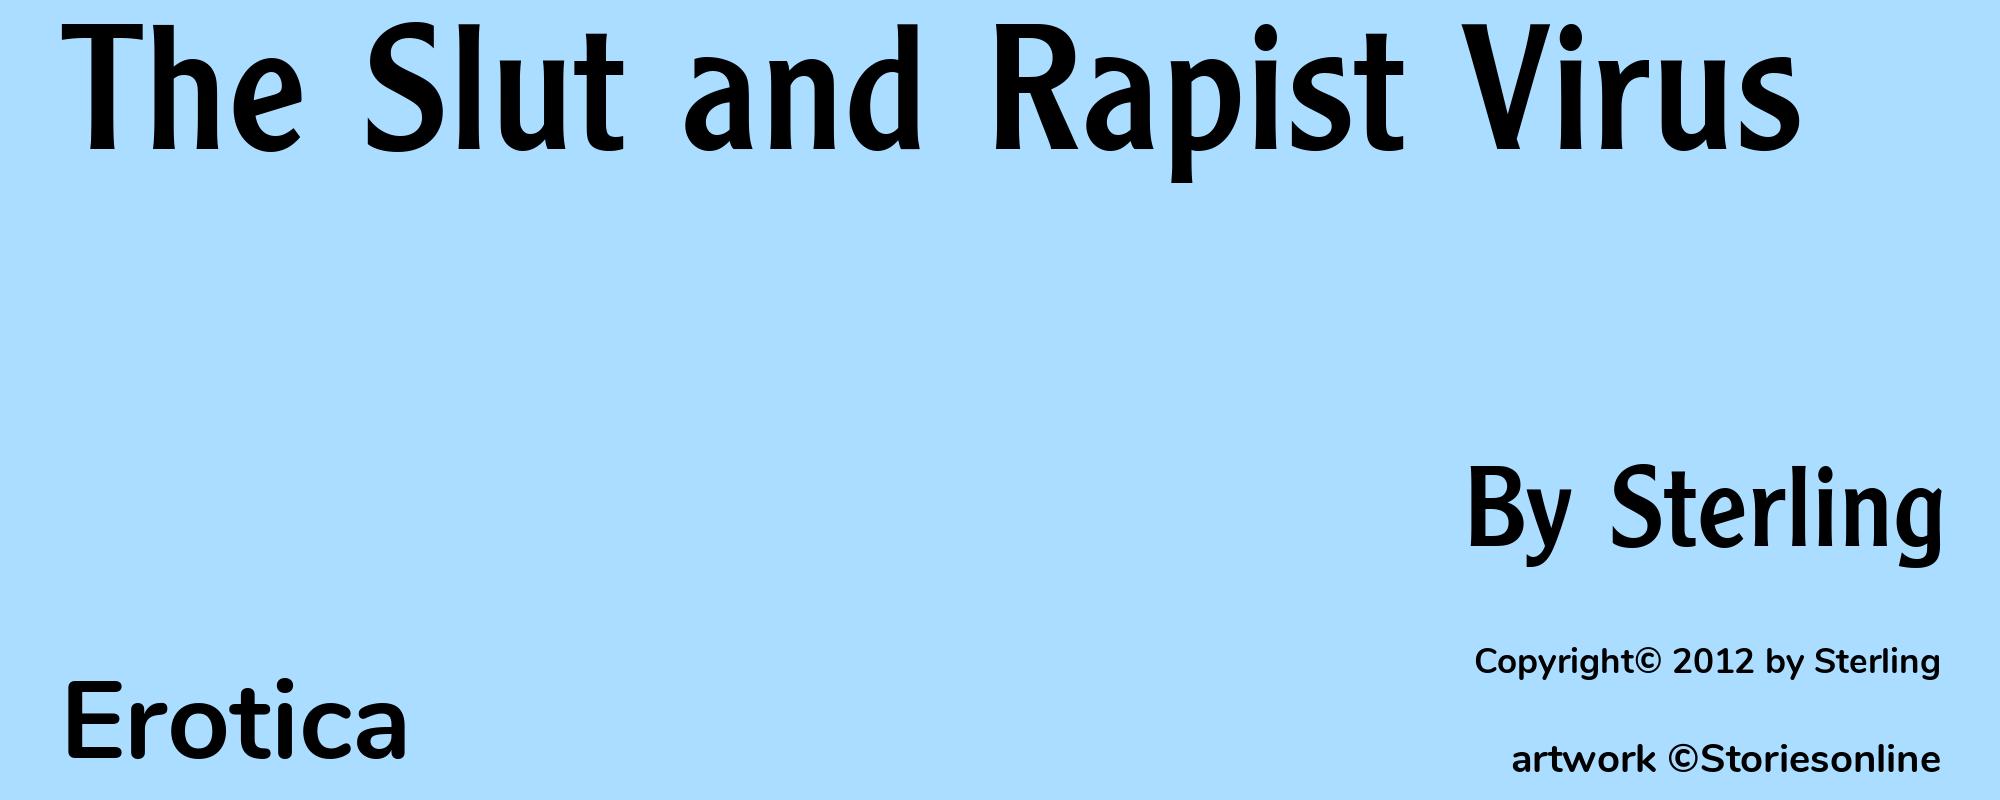 The Slut and Rapist Virus - Cover